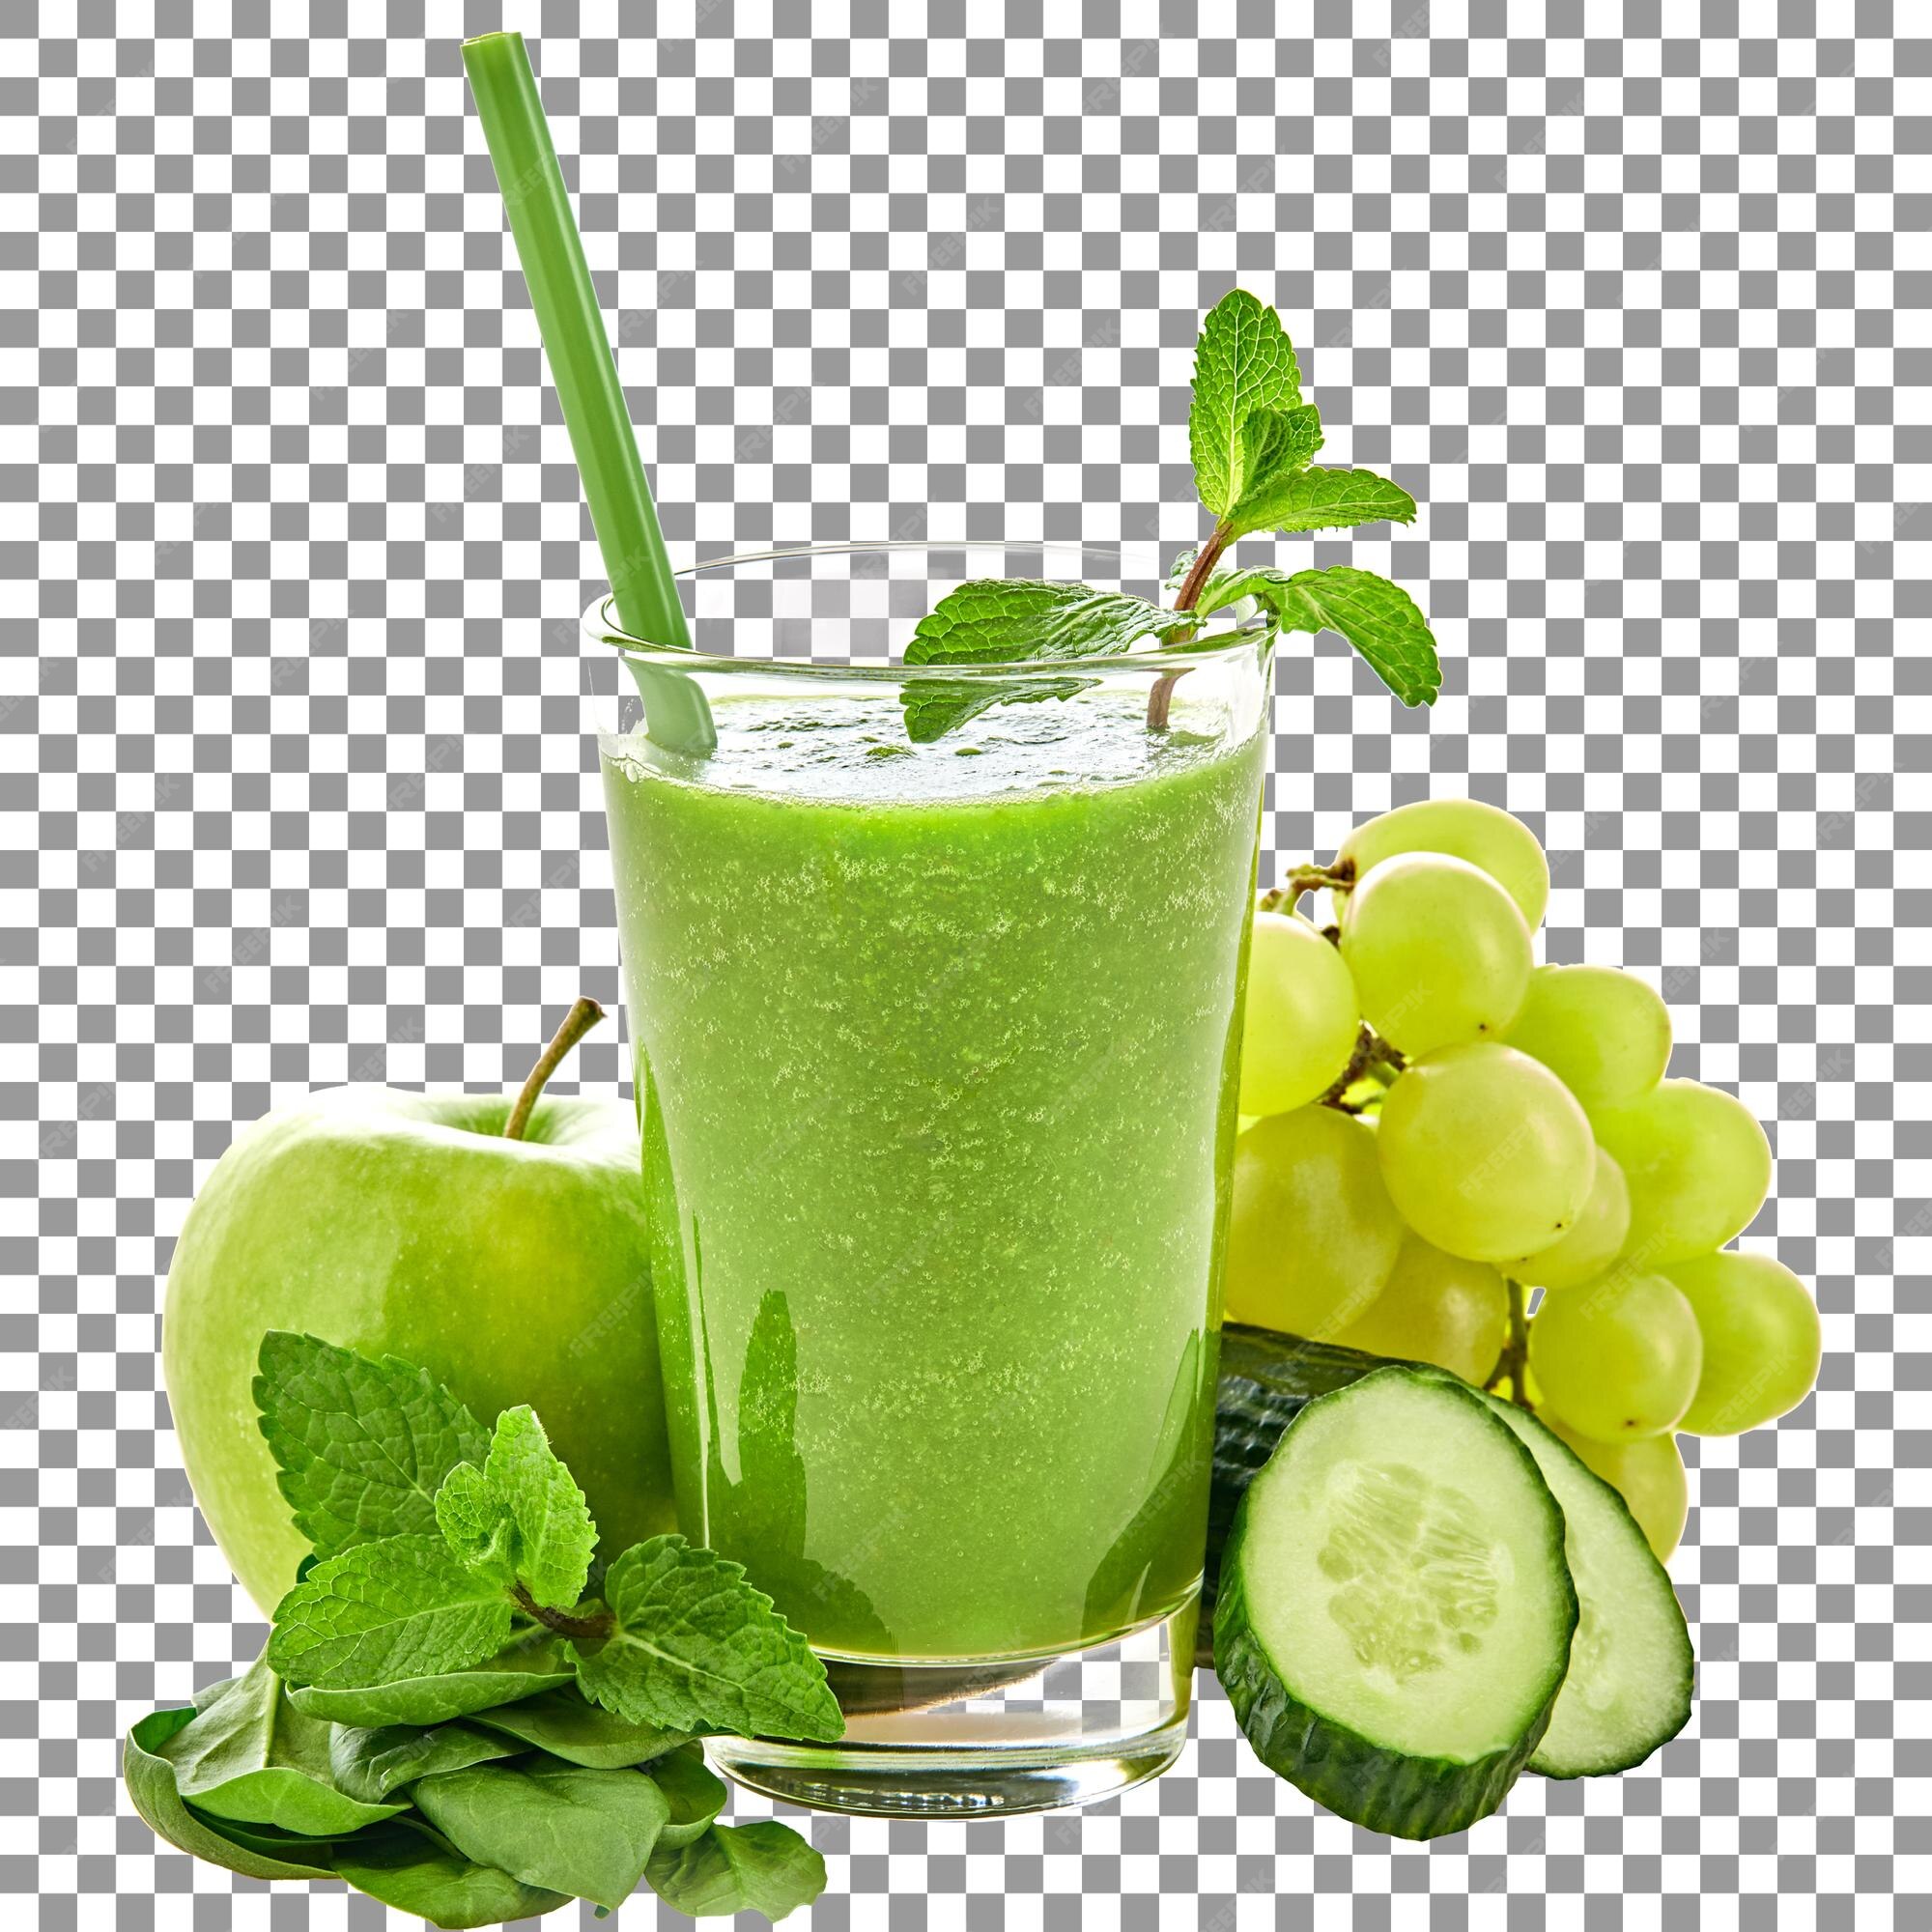 https://img.freepik.com/premium-psd/glass-green-smoothie-with-straw-fruits-transparent-background_812337-1109.jpg?w=2000